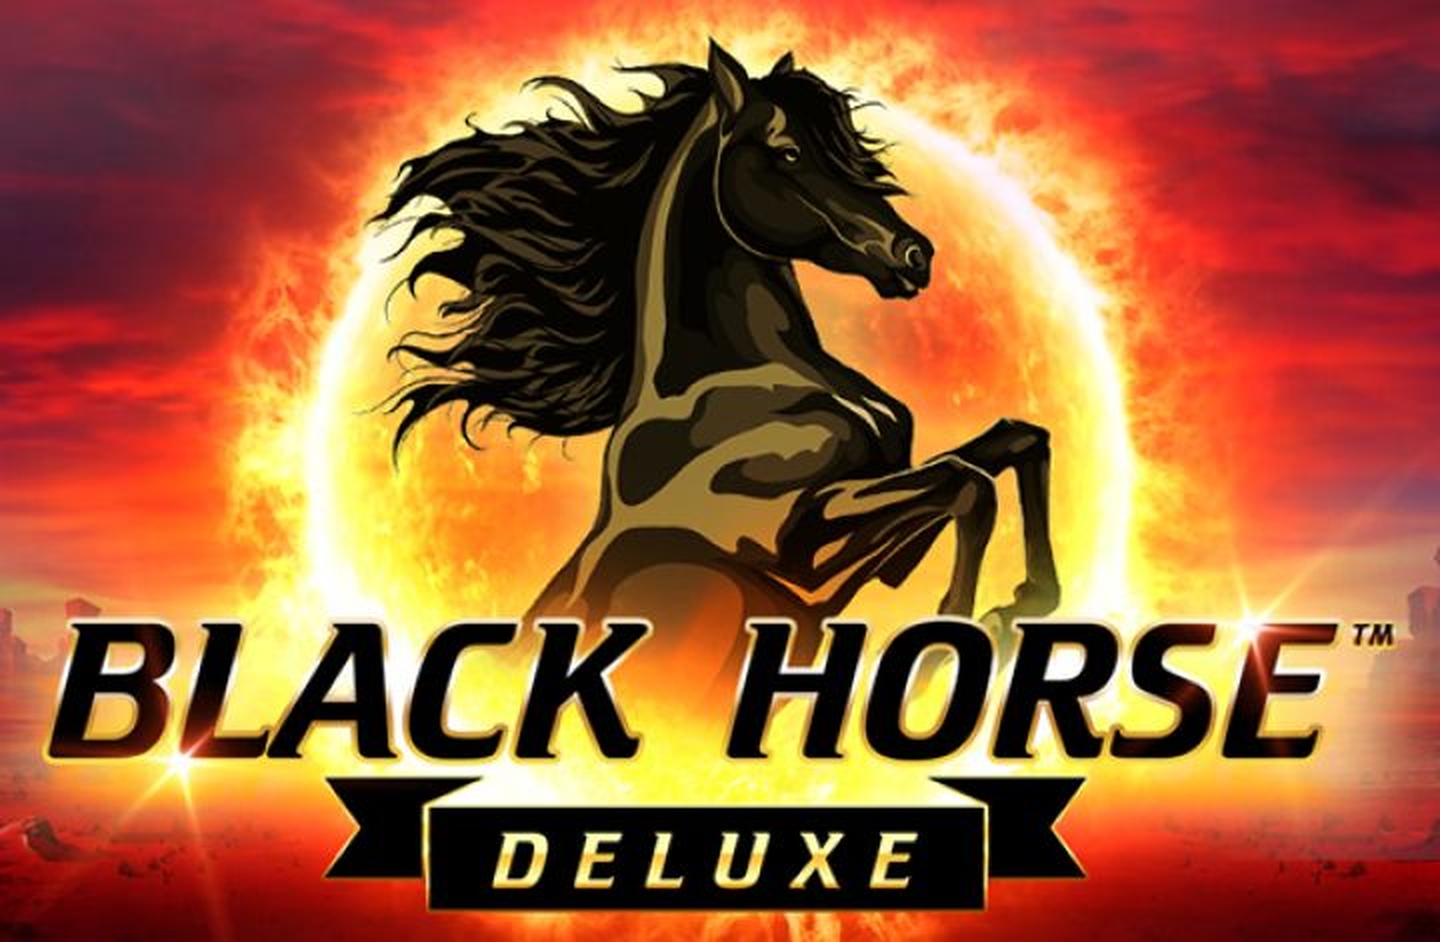 The Black Horse Deluxe Online Slot Demo Game by Wazdan